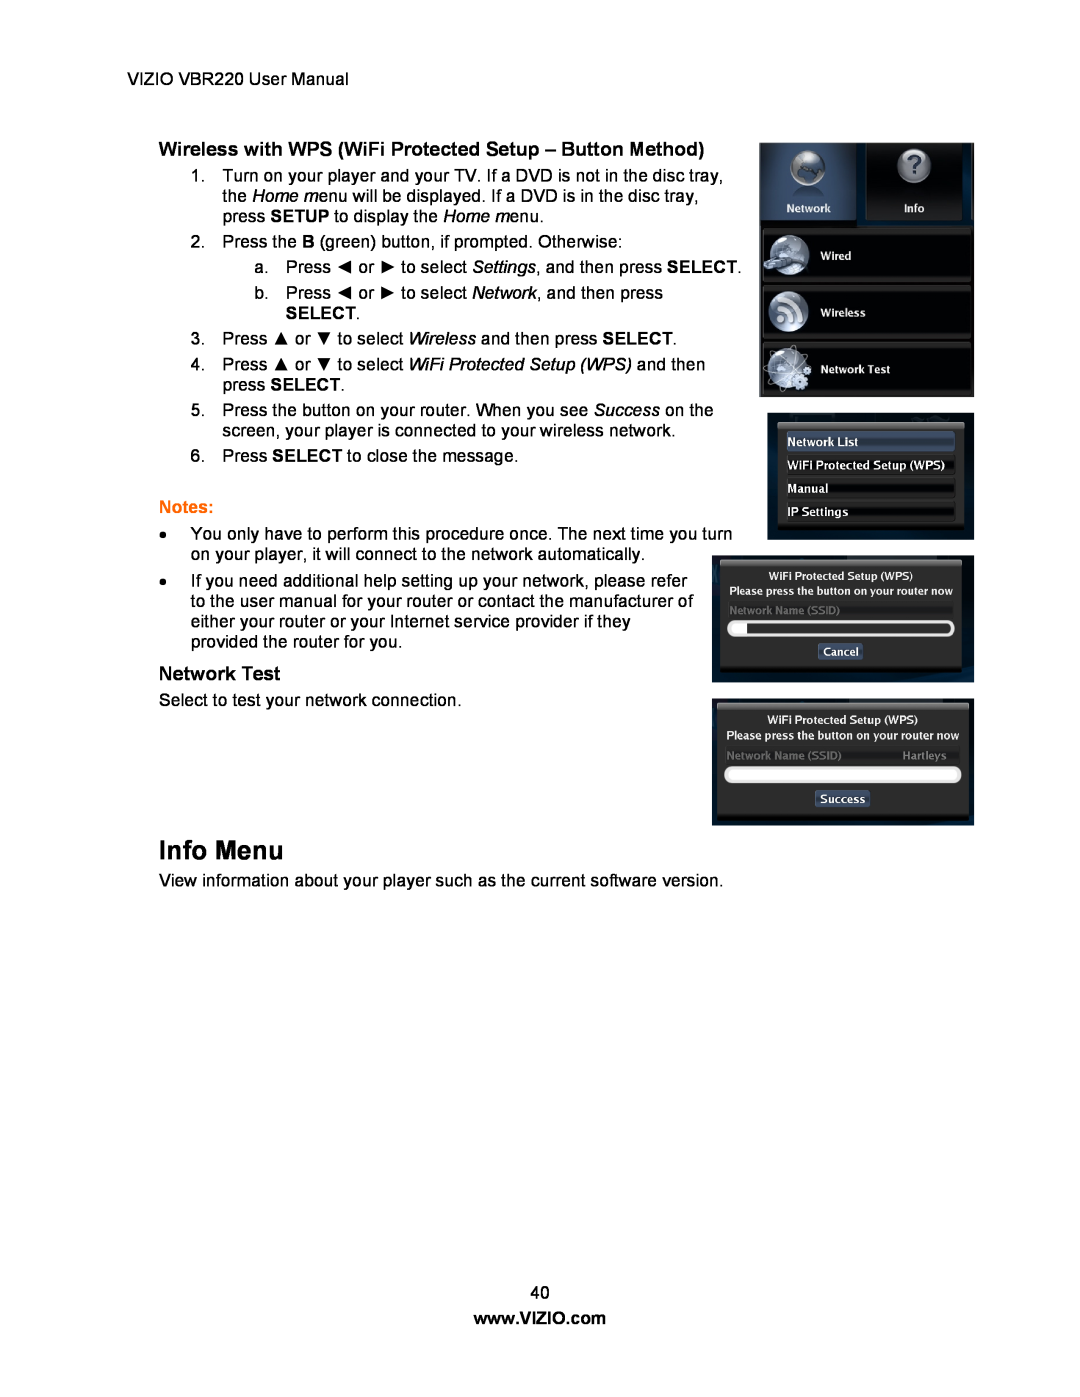 Panasonic VBR220 user manual Info Menu, Wireless with WPS WiFi Protected Setup - Button Method, Network Test, Select 